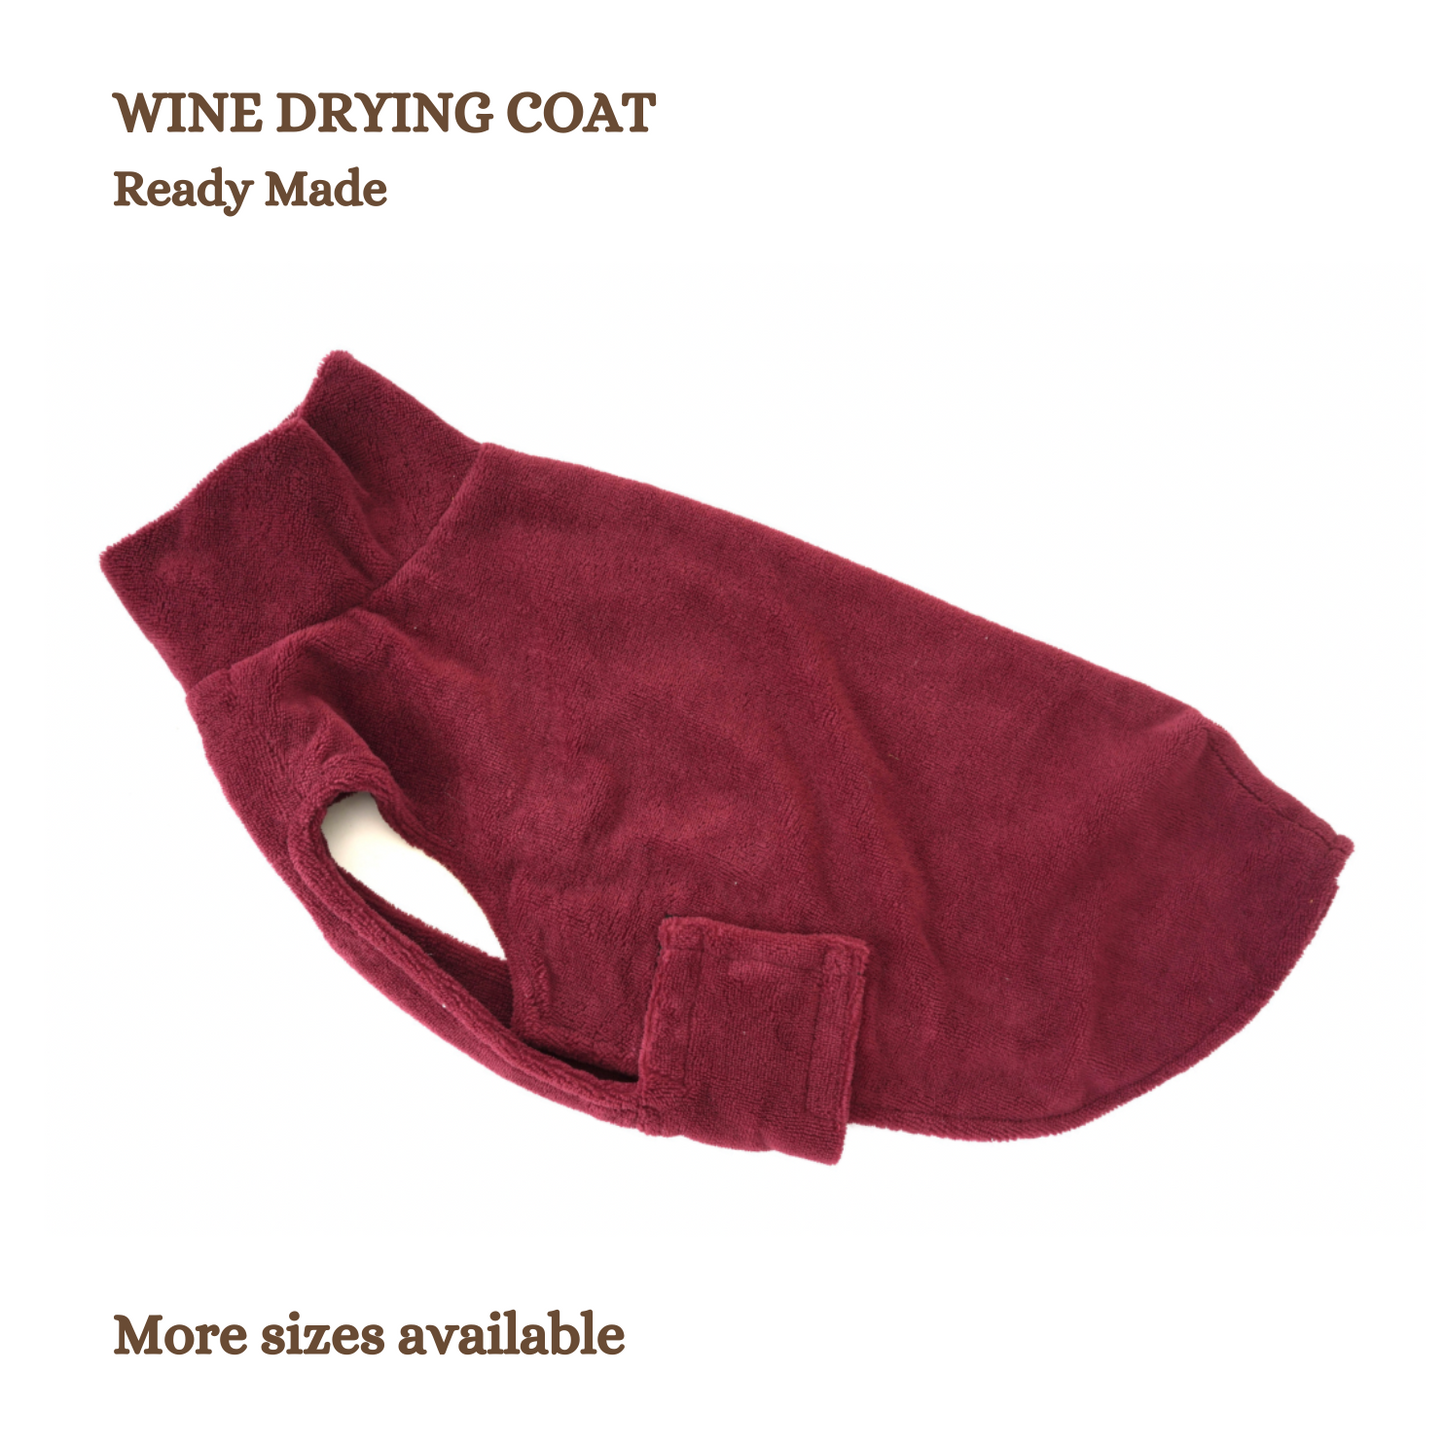 Wine Drying coats